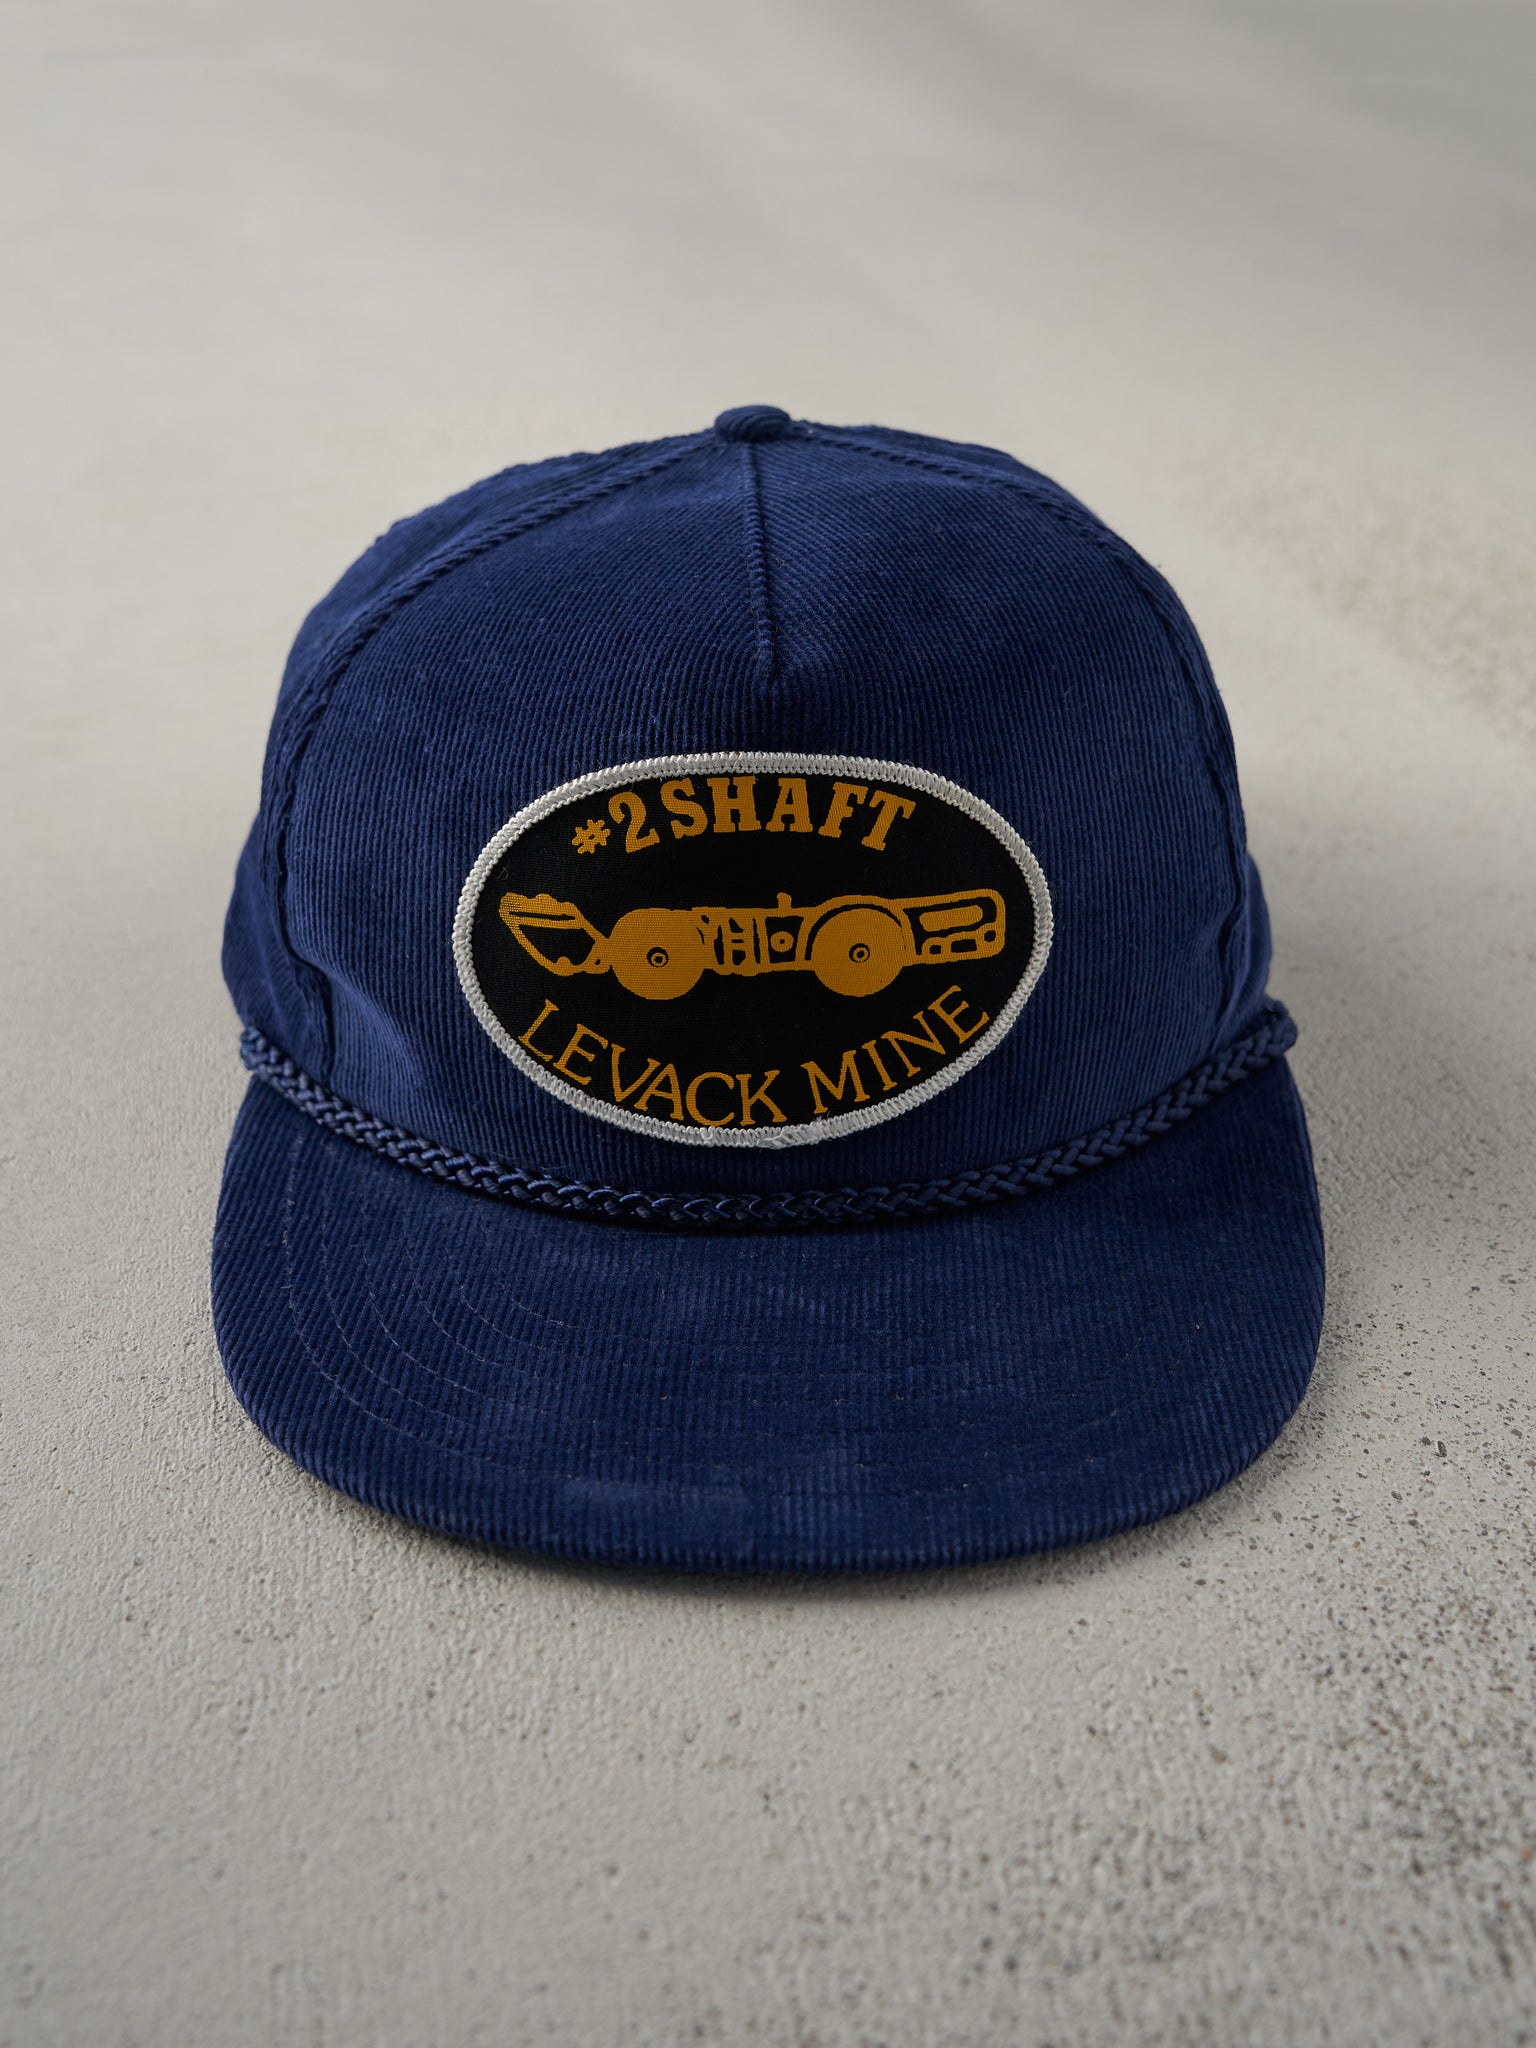 Vintage 80s Navy 2 Shaft Corduroy Snapback Hat